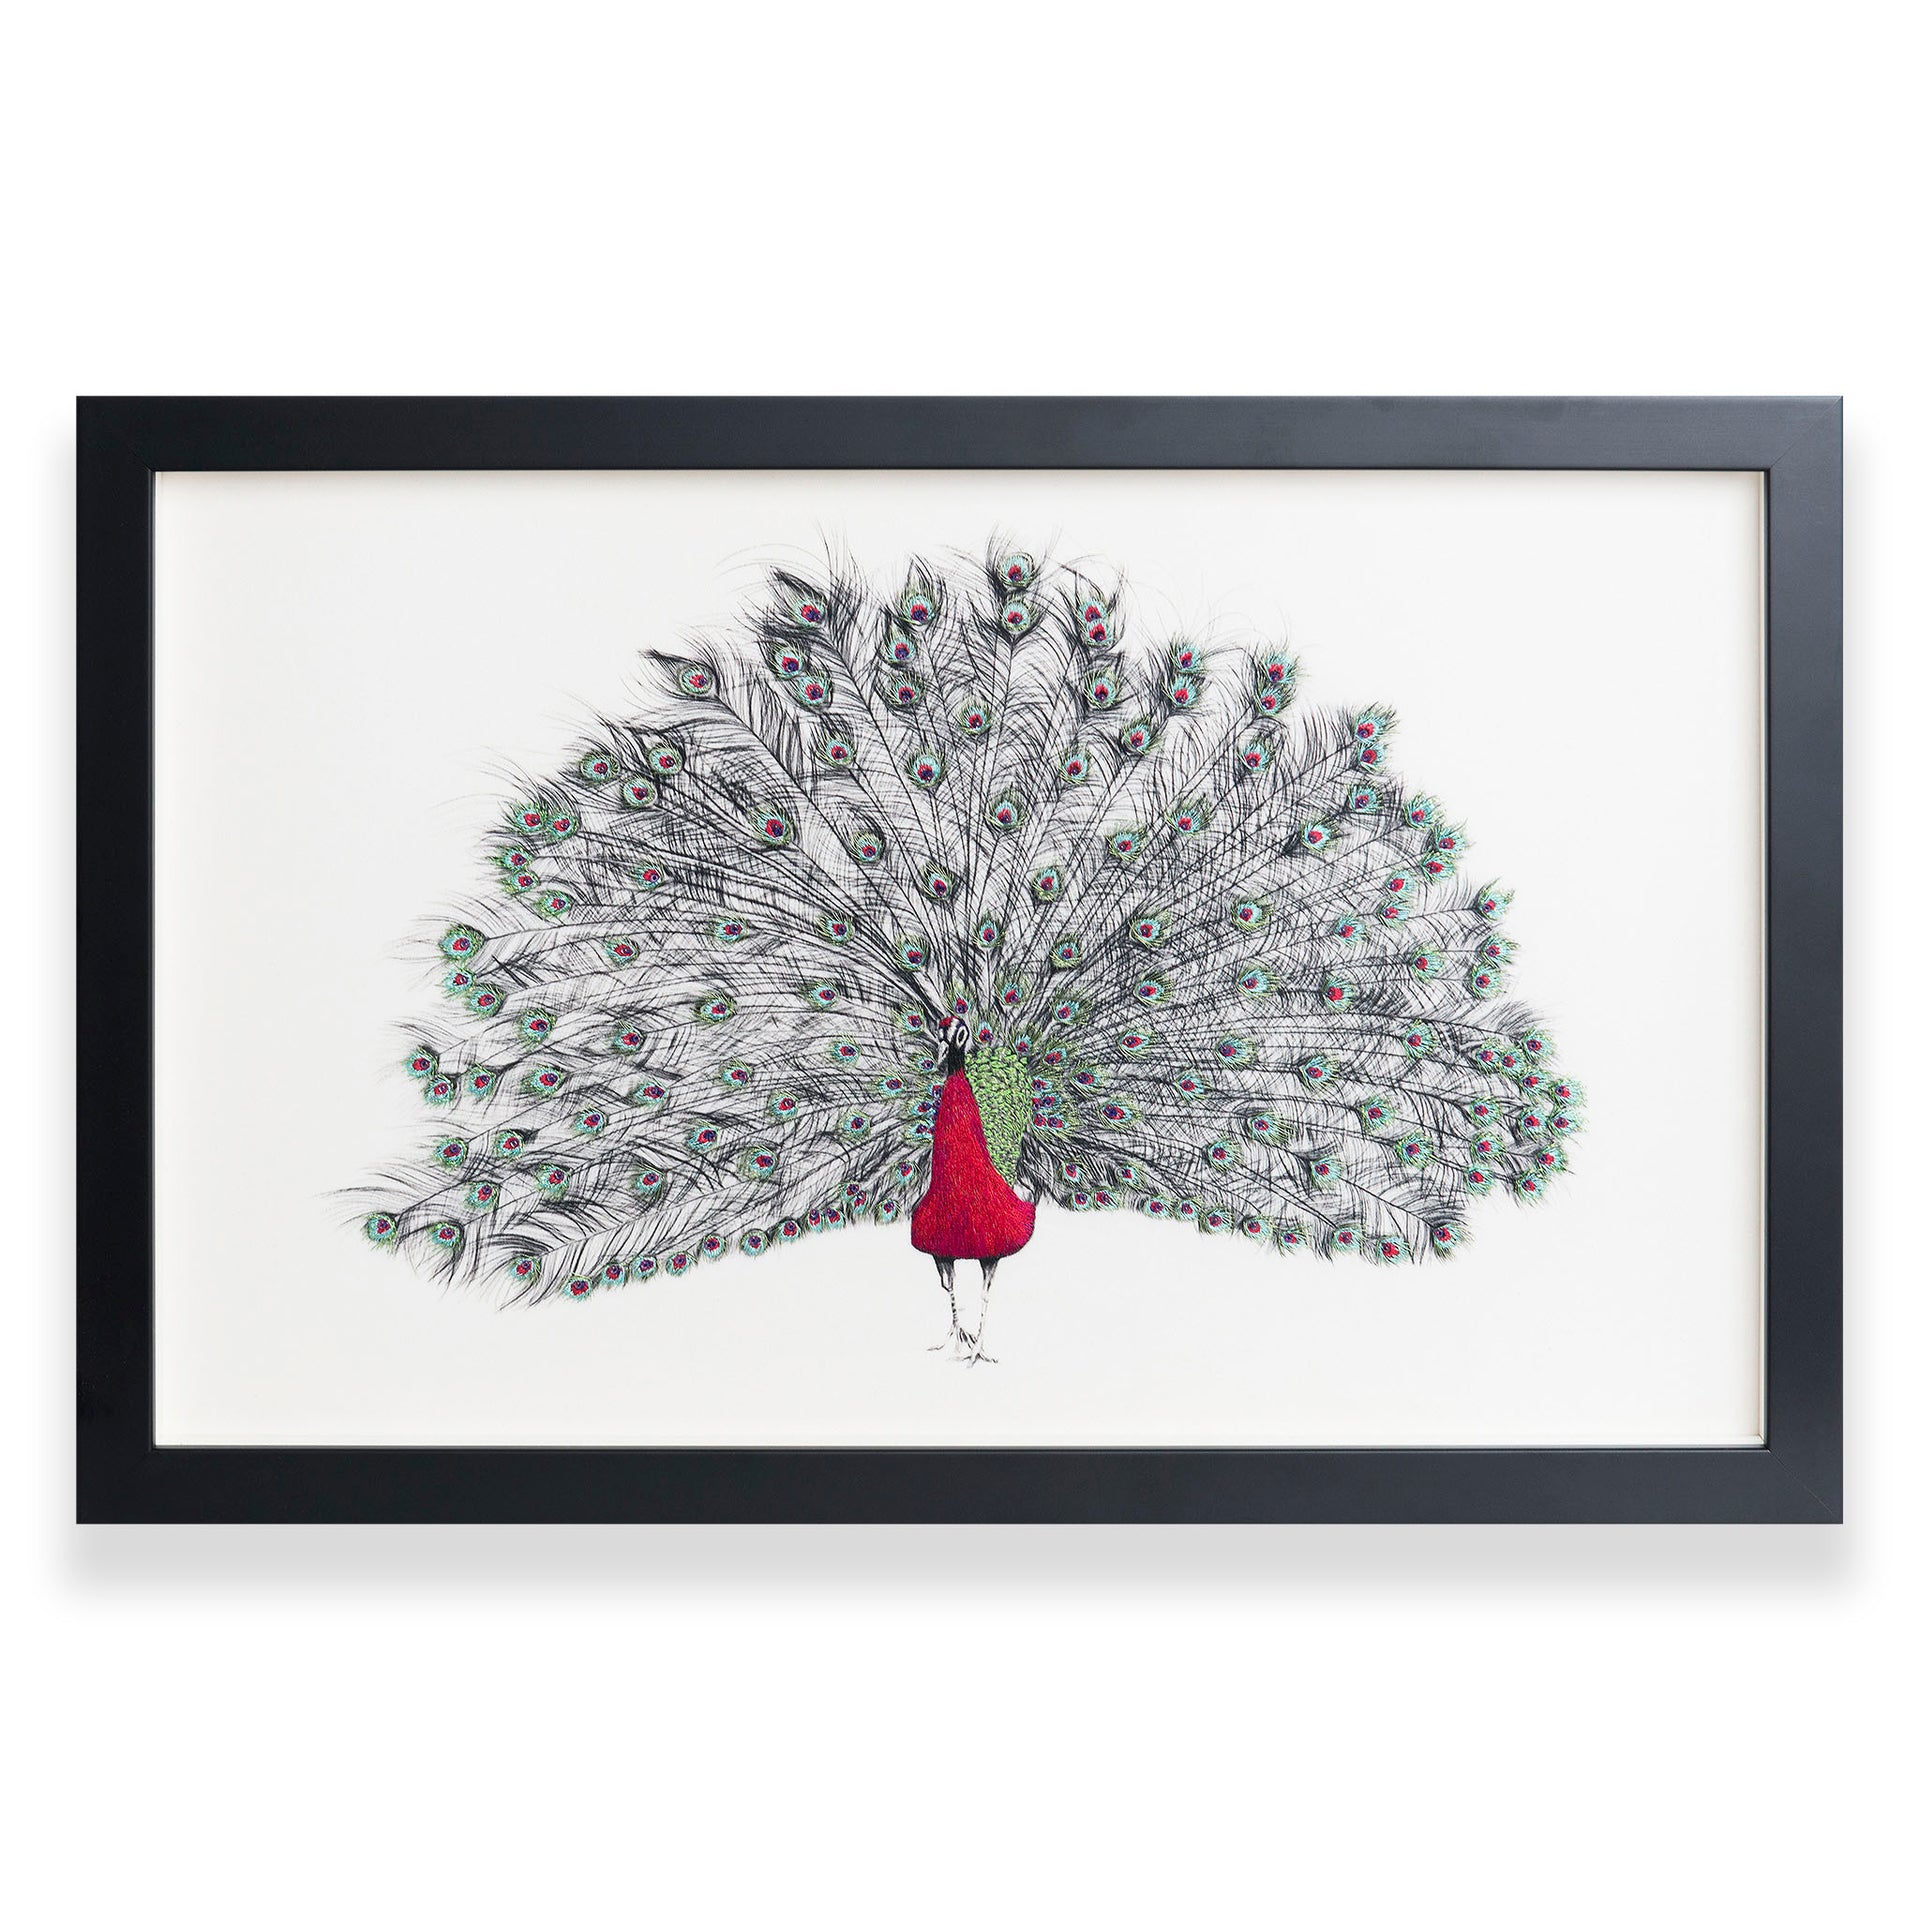 Original peacock hand embroidered artwork in black frame